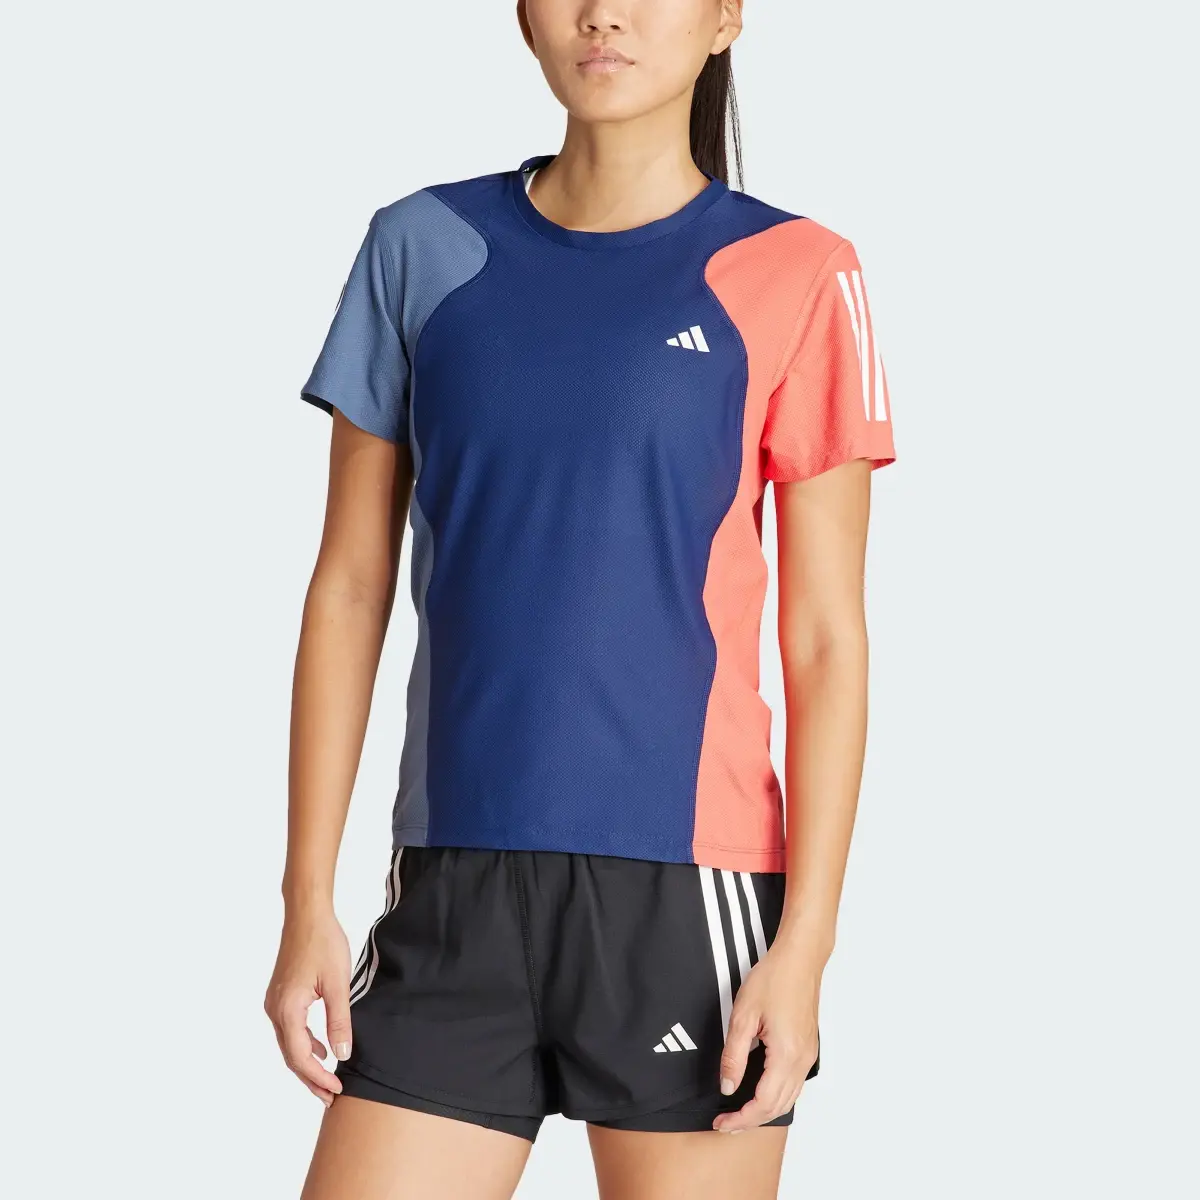 Adidas Own the Run Colorblock Tişört. 1